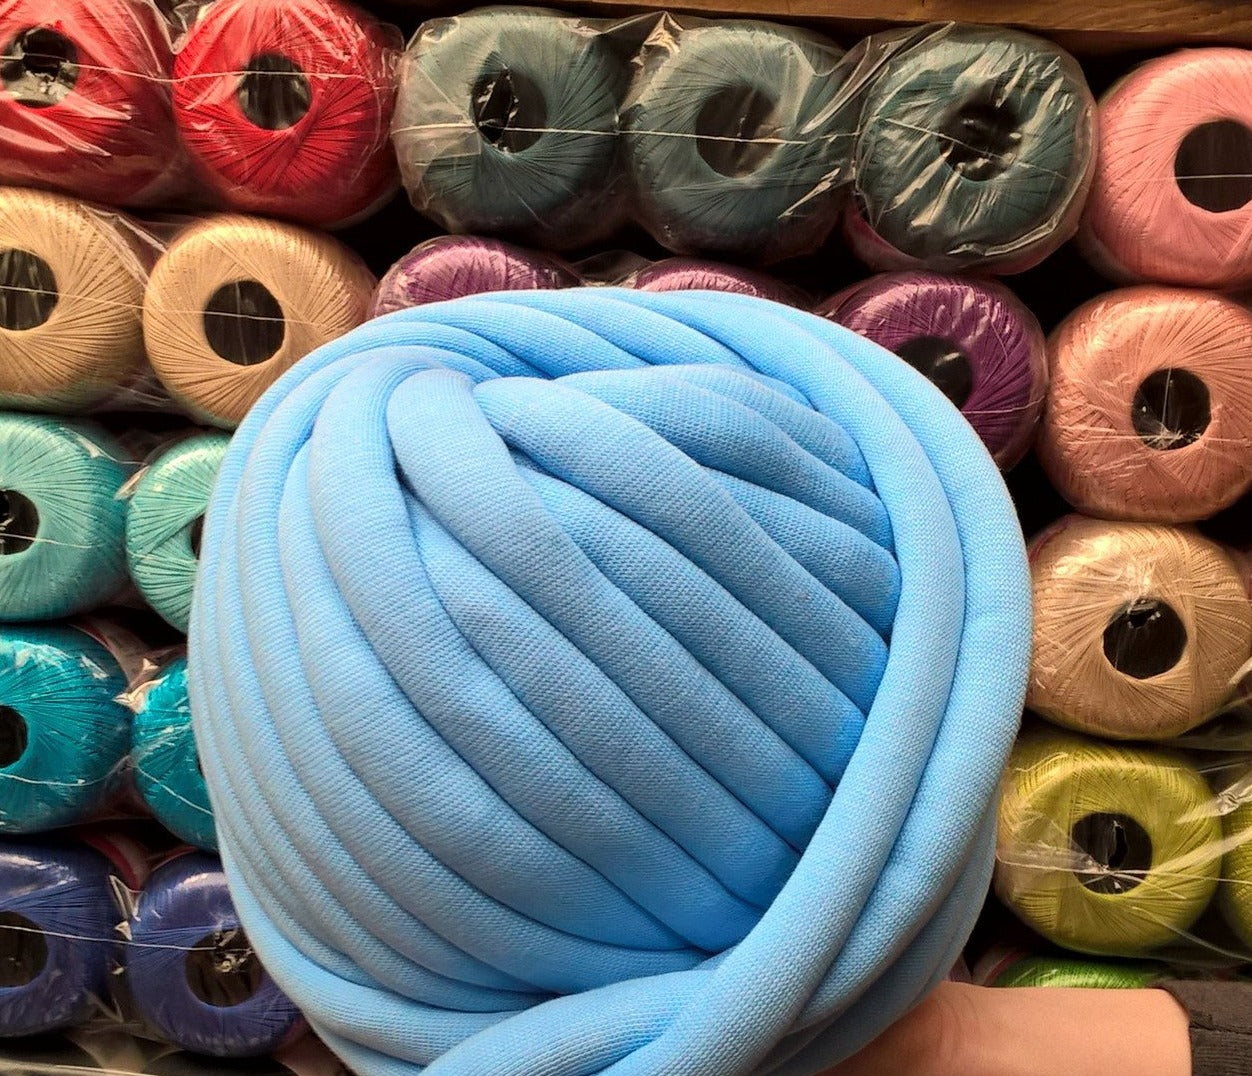 Cotton tube yarn Marshmallow №908